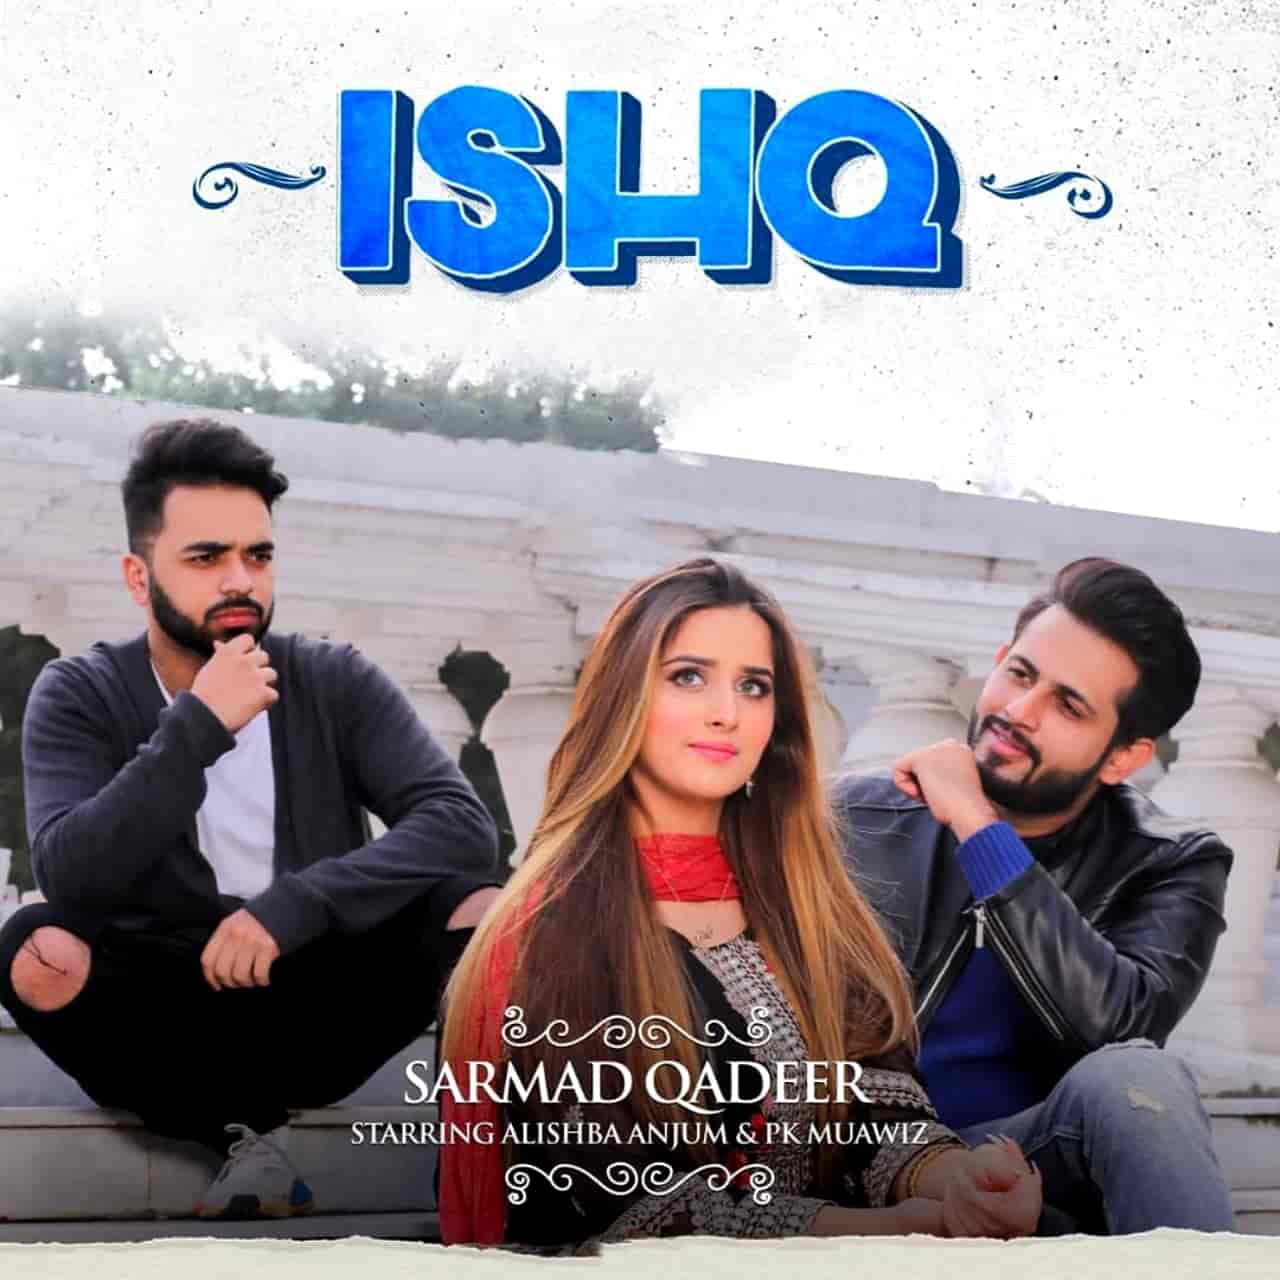 Ishq Song Image Features Alishba Anjum And Pk Muawiz